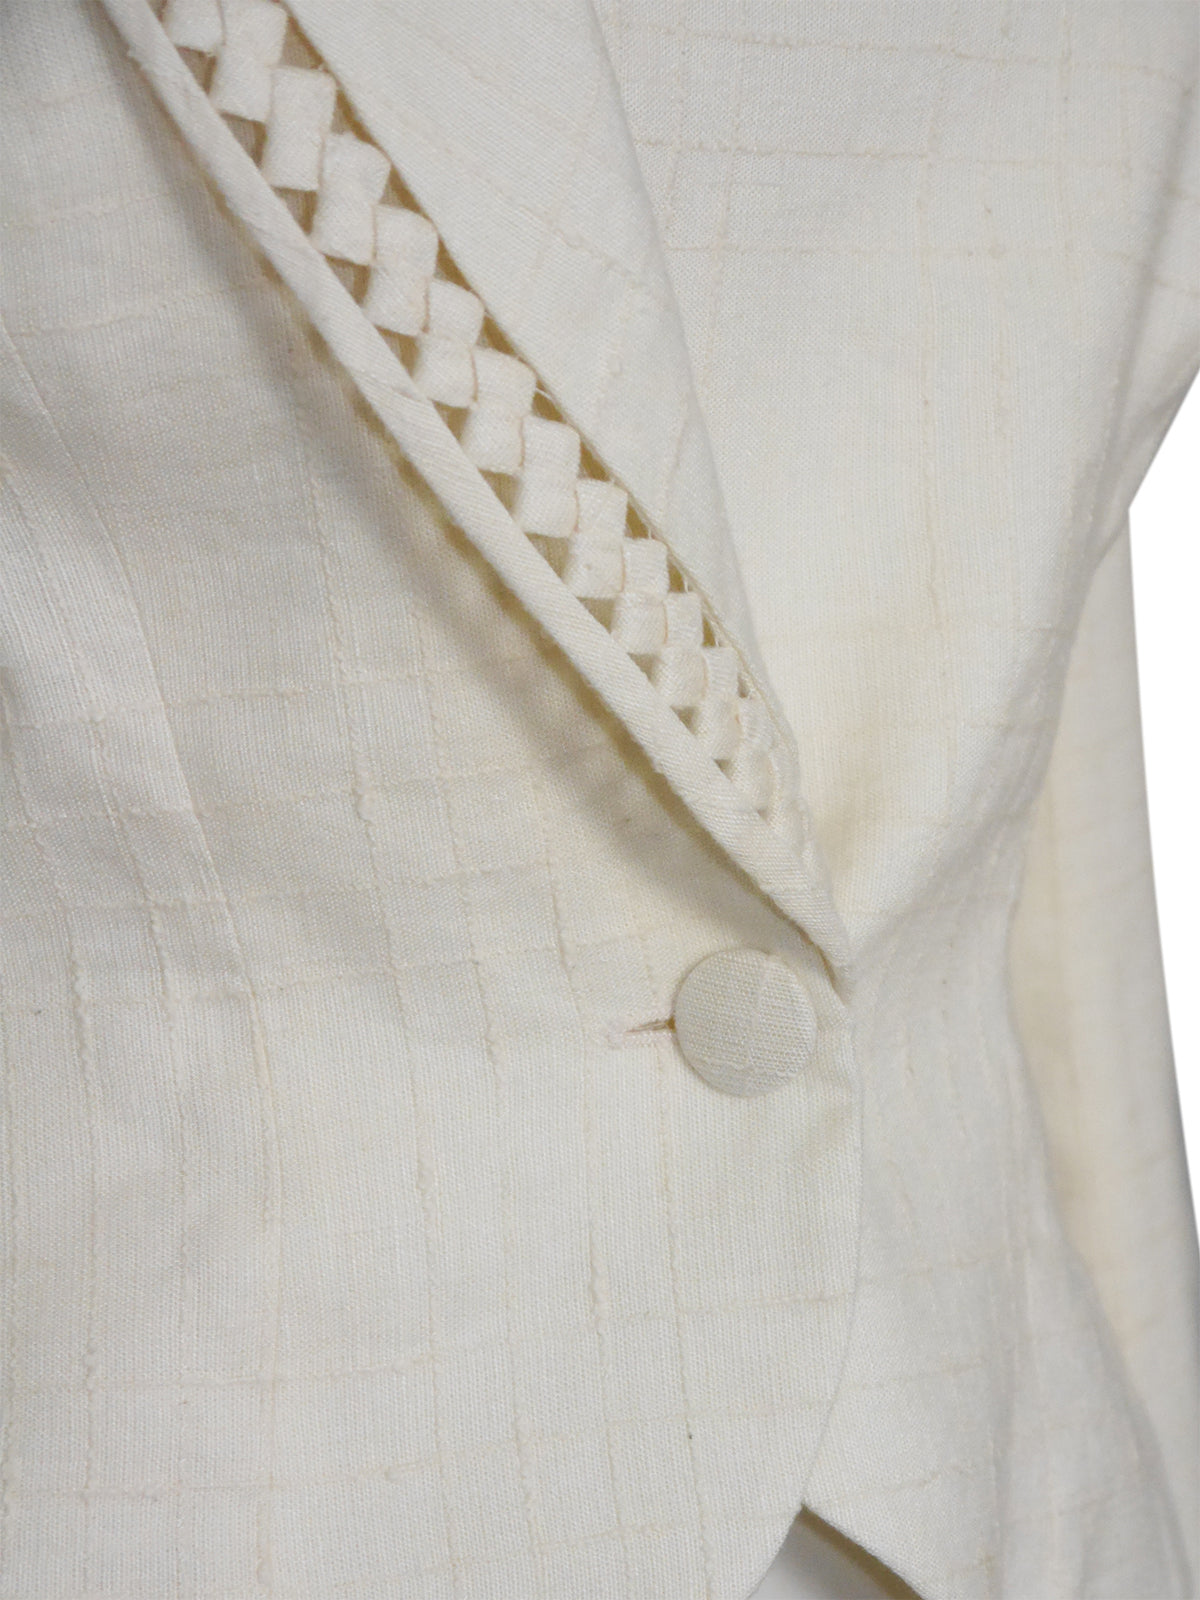 JOHN GALLIANO Spring 1999 Vintage Openwork Linen Jacket w/ Asymmetrical Collar SIZE M